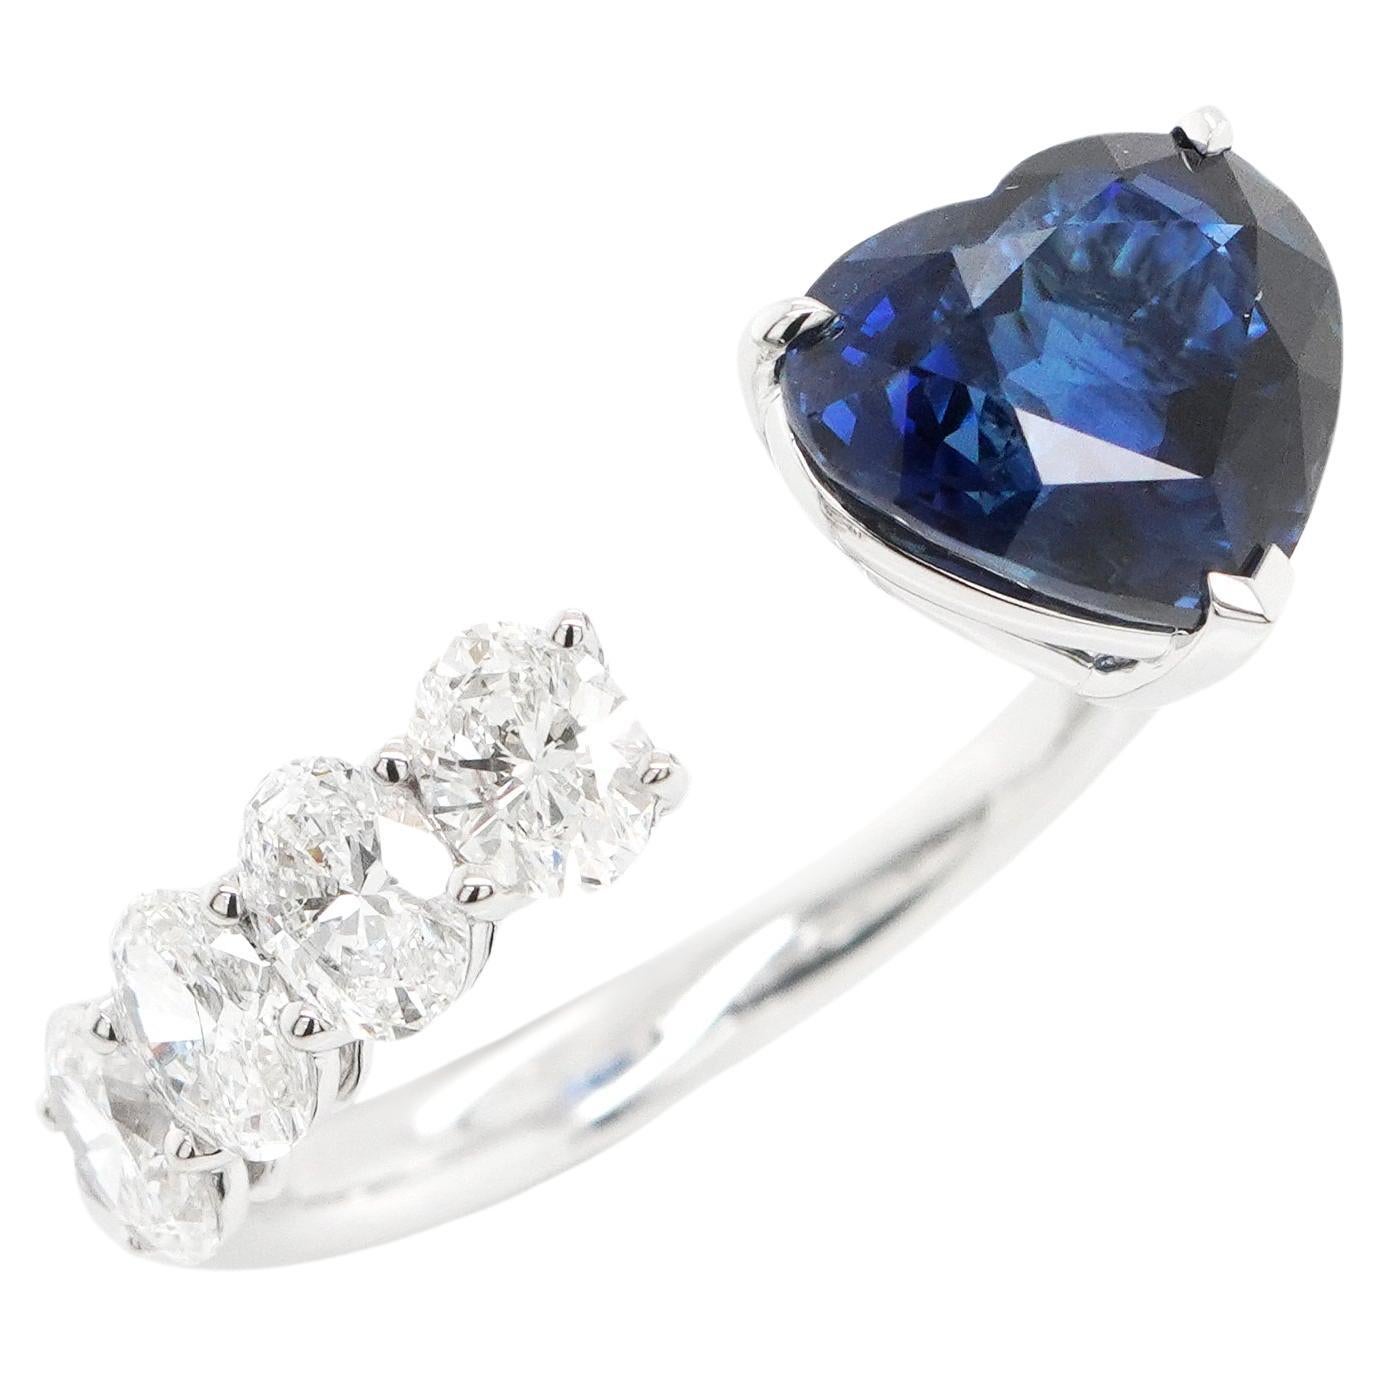 BENJAMIN FINE JEWELRY 3.14 cts Blue Sapphire with Diamond 18K Ring